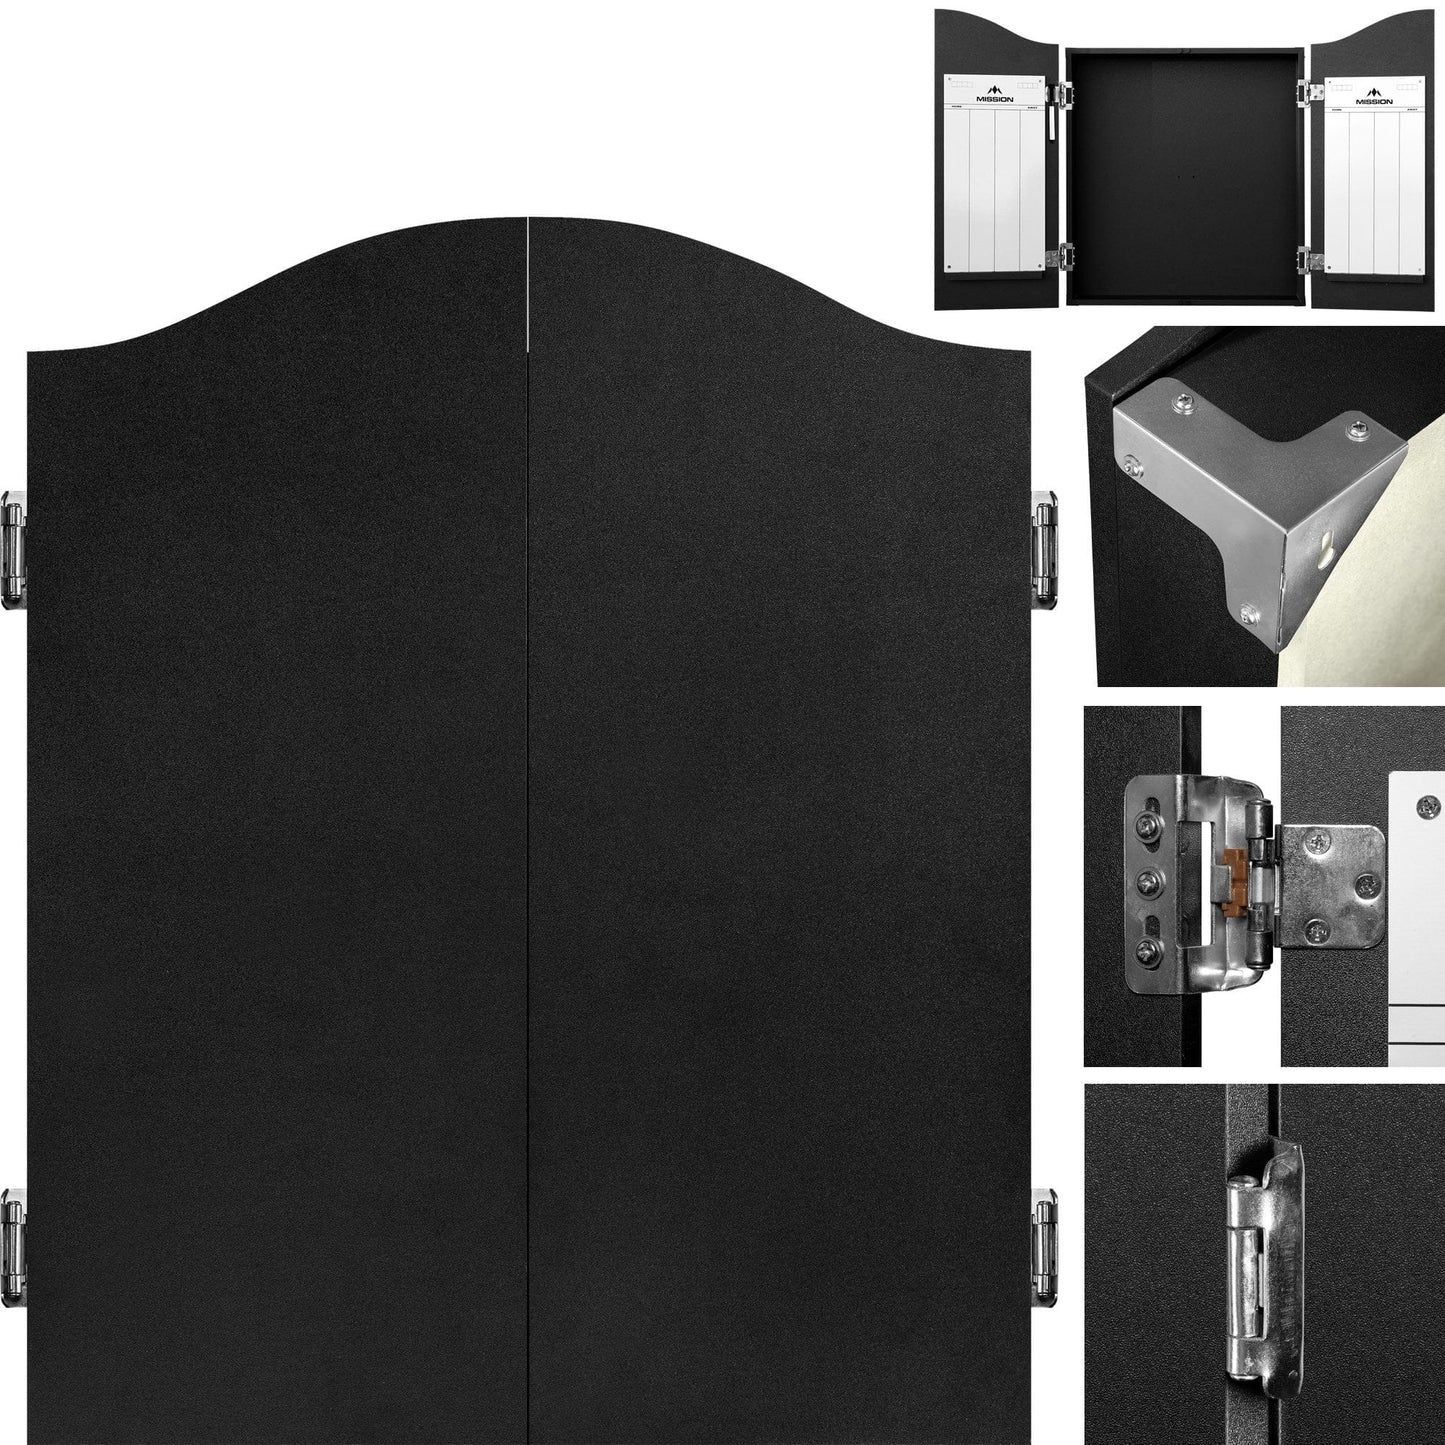 Mission Dartboard Cabinet - Deluxe Quality - Plain Black